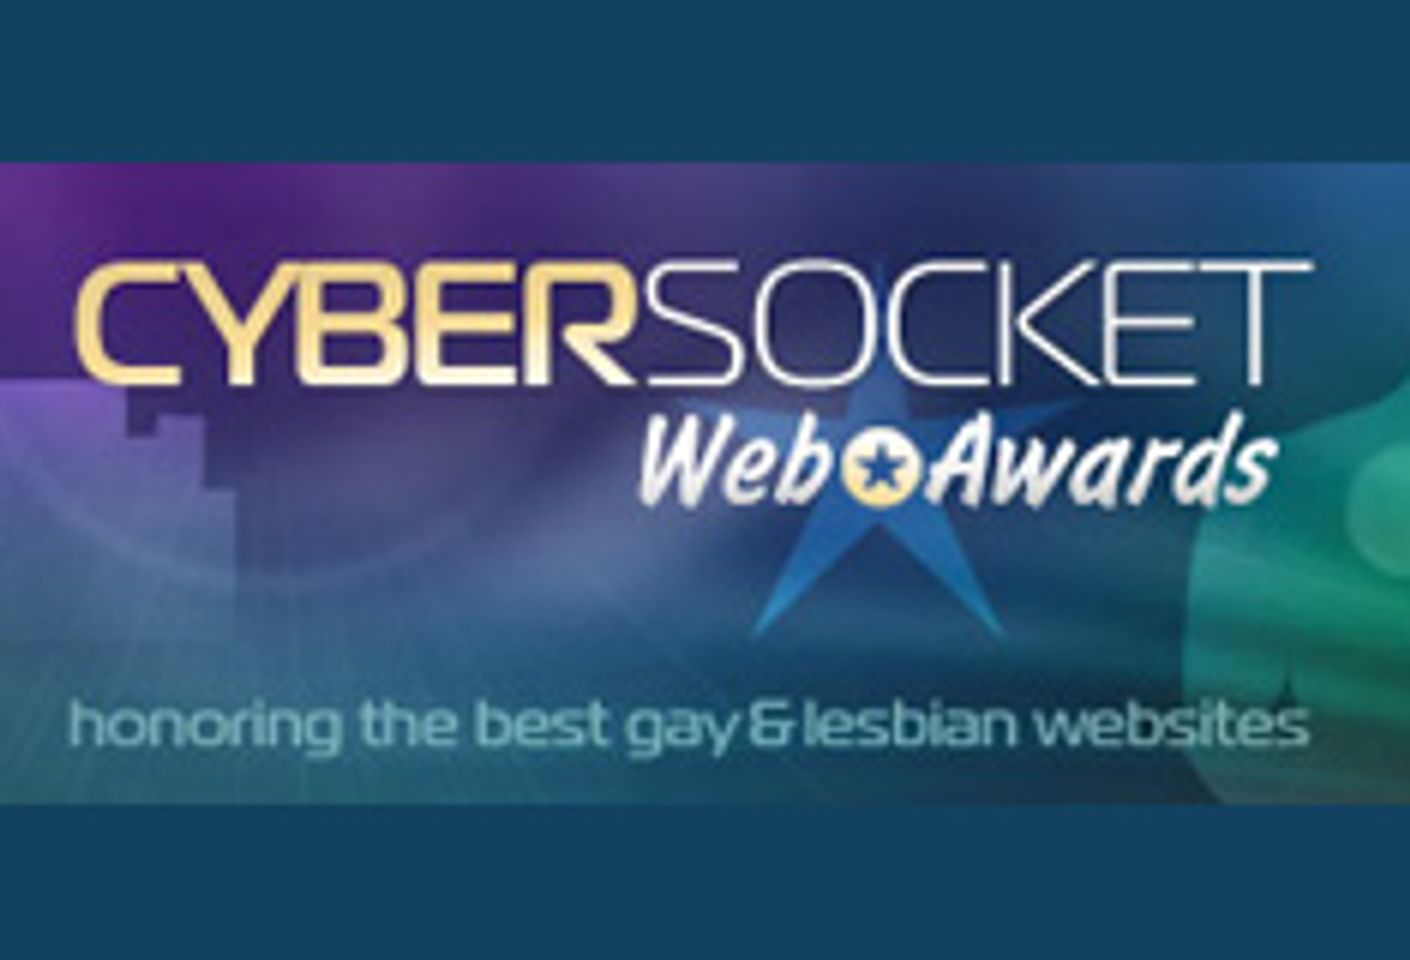 10th Annual Cybersocket Web Awards Seeks Sponsors